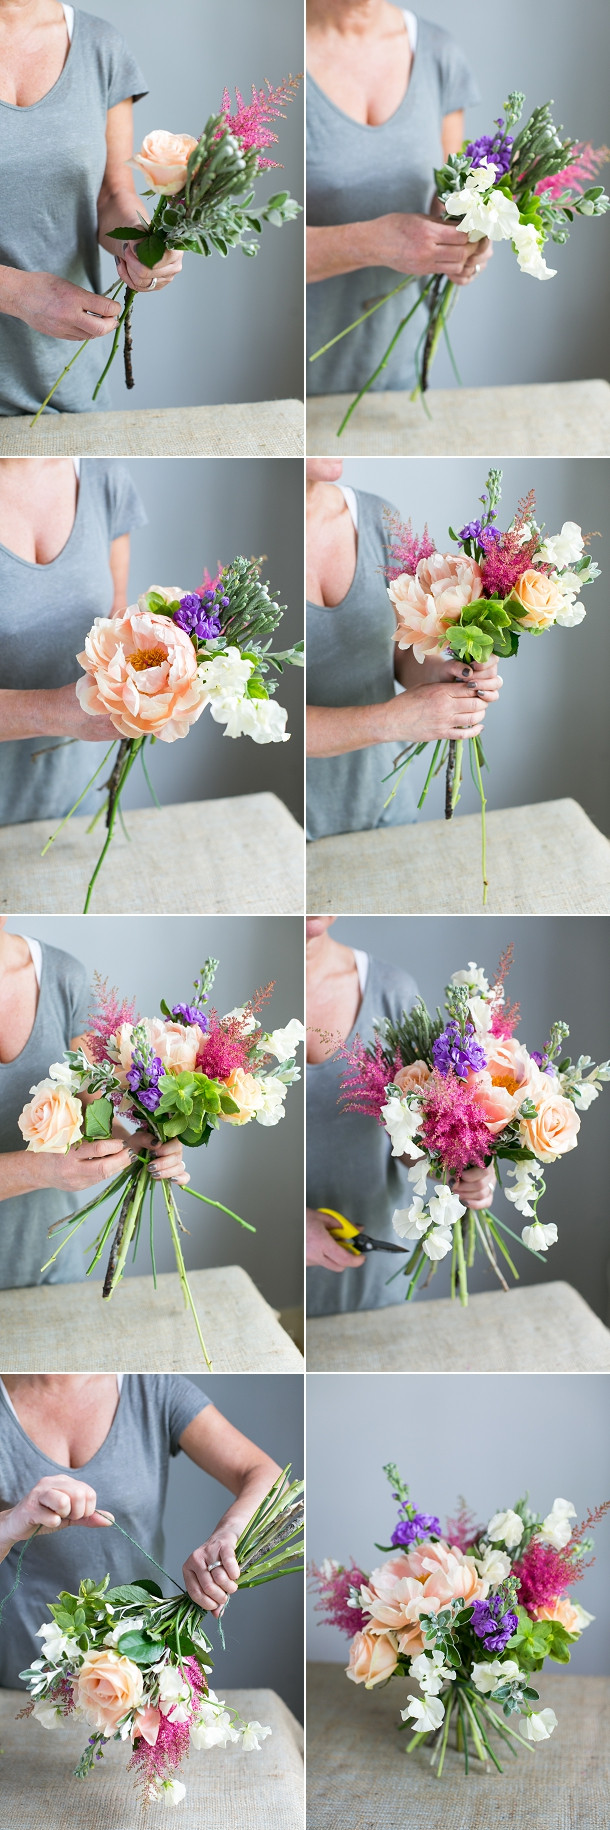 How To DIY Wedding Flowers
 DIY Spring bouquet tutorial with peonies